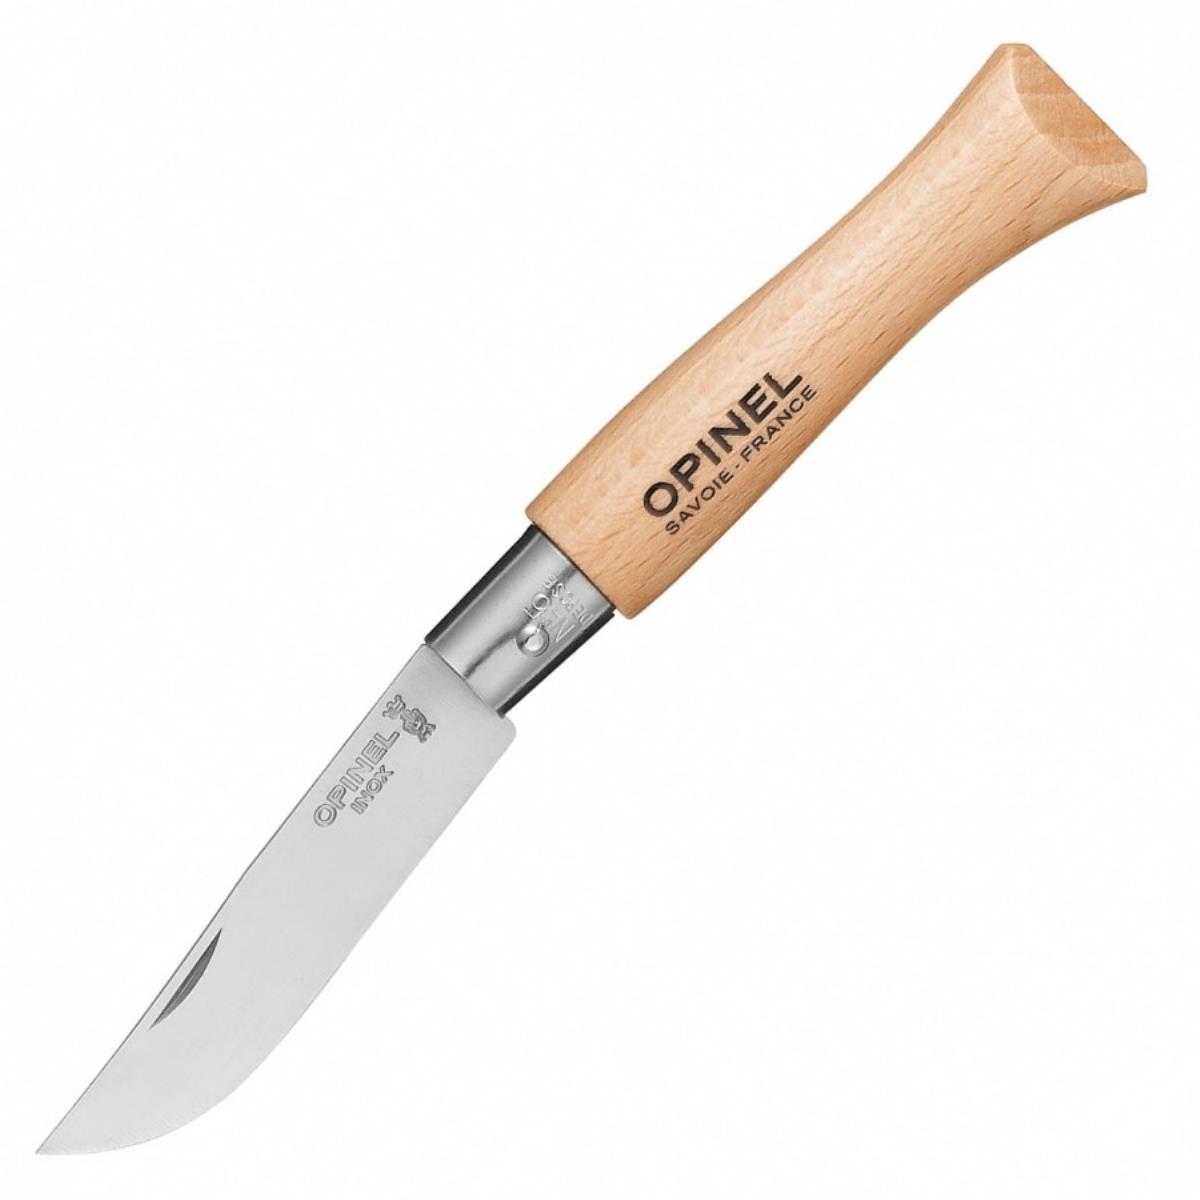 Нож №5 VRI Tradition Inox (нержавеющая сталь, рукоять бук, длина клинка 6 см) 0010729 OPINEL нож складной серая рукоять g10 сталь aus 8 bk01bo424 strike coyote boker